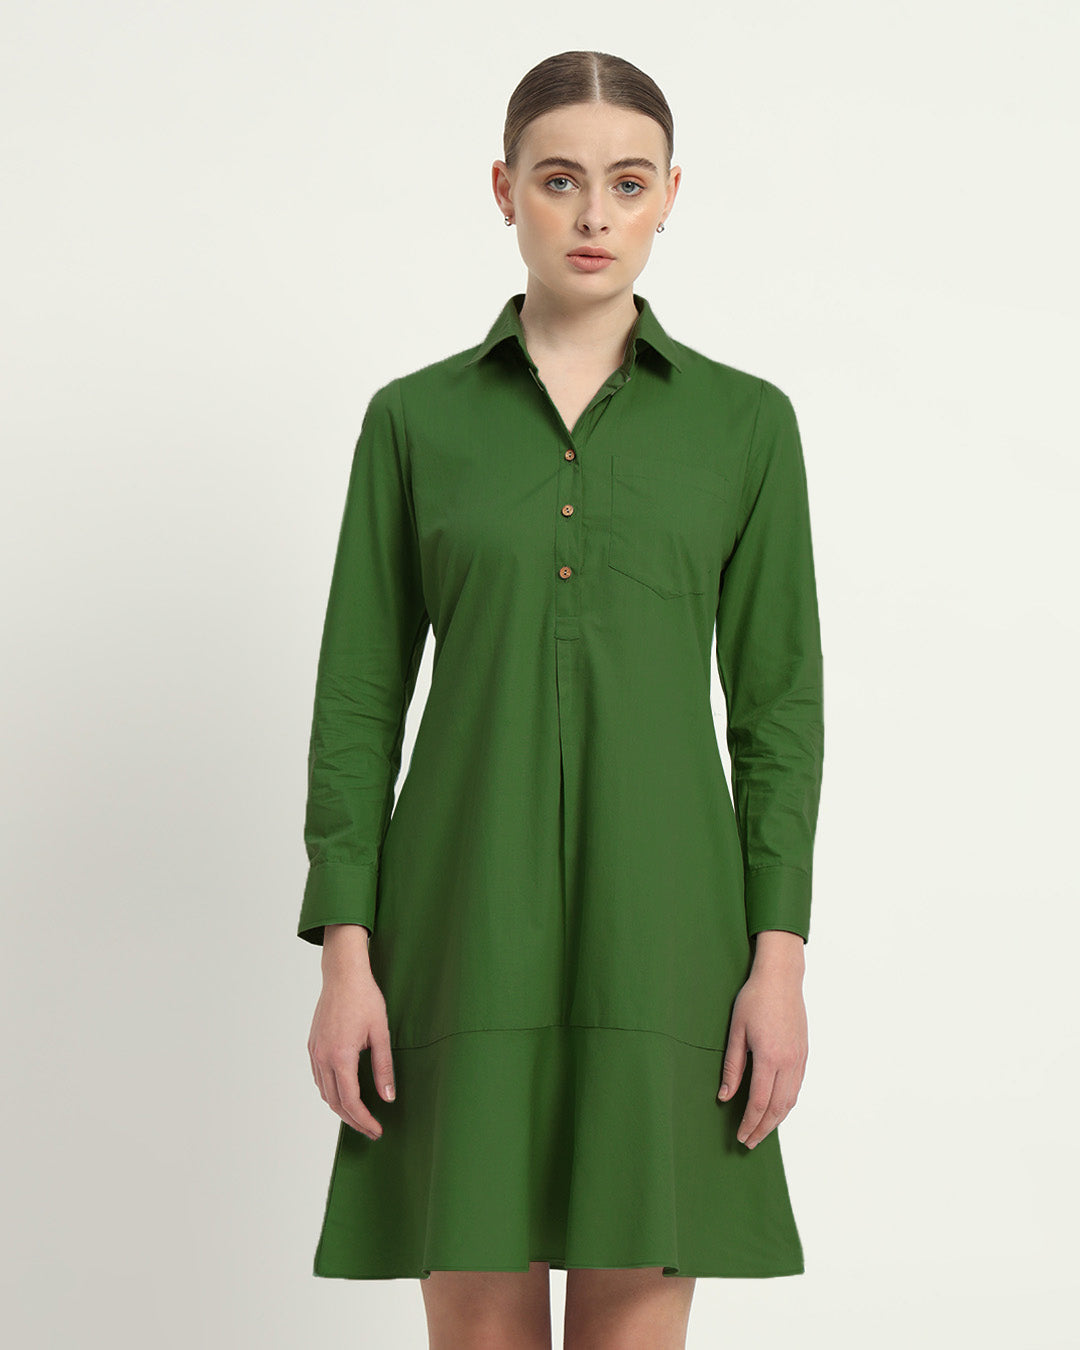 The Emerald Medina Cotton Dress